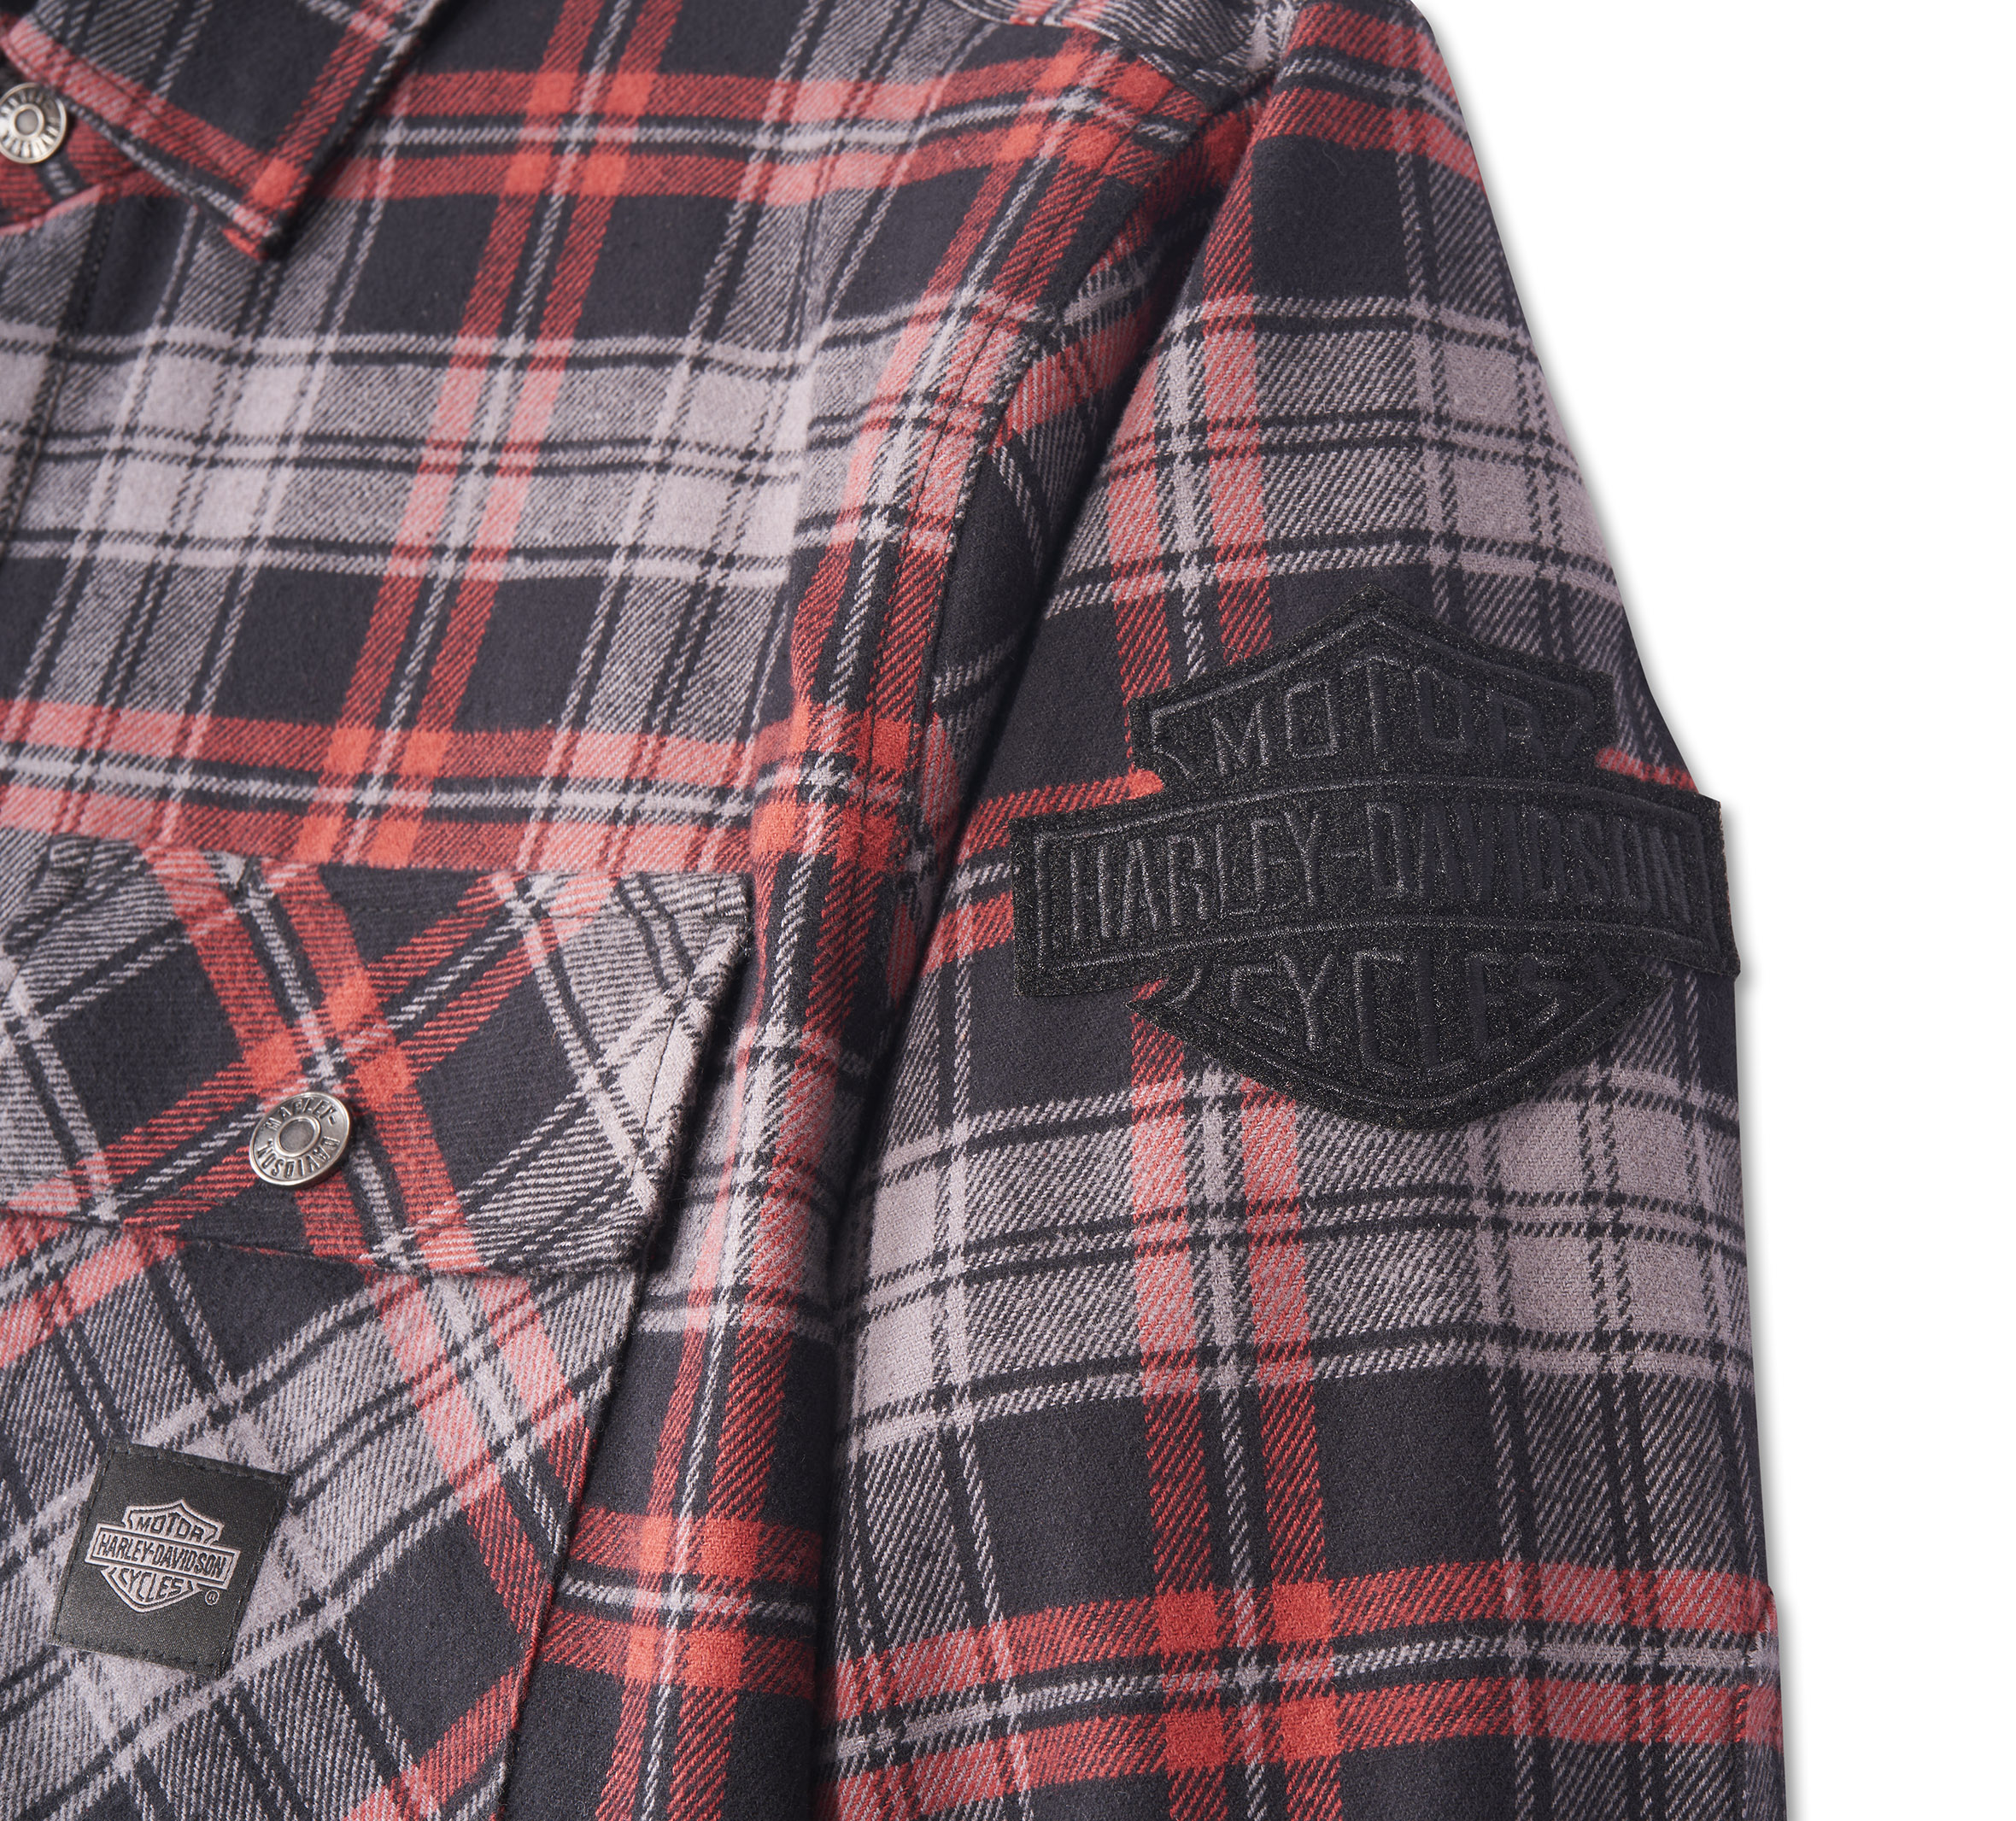 Men's Nomad Shirt Jacket - Russet Brown Plaid | Harley-Davidson USA